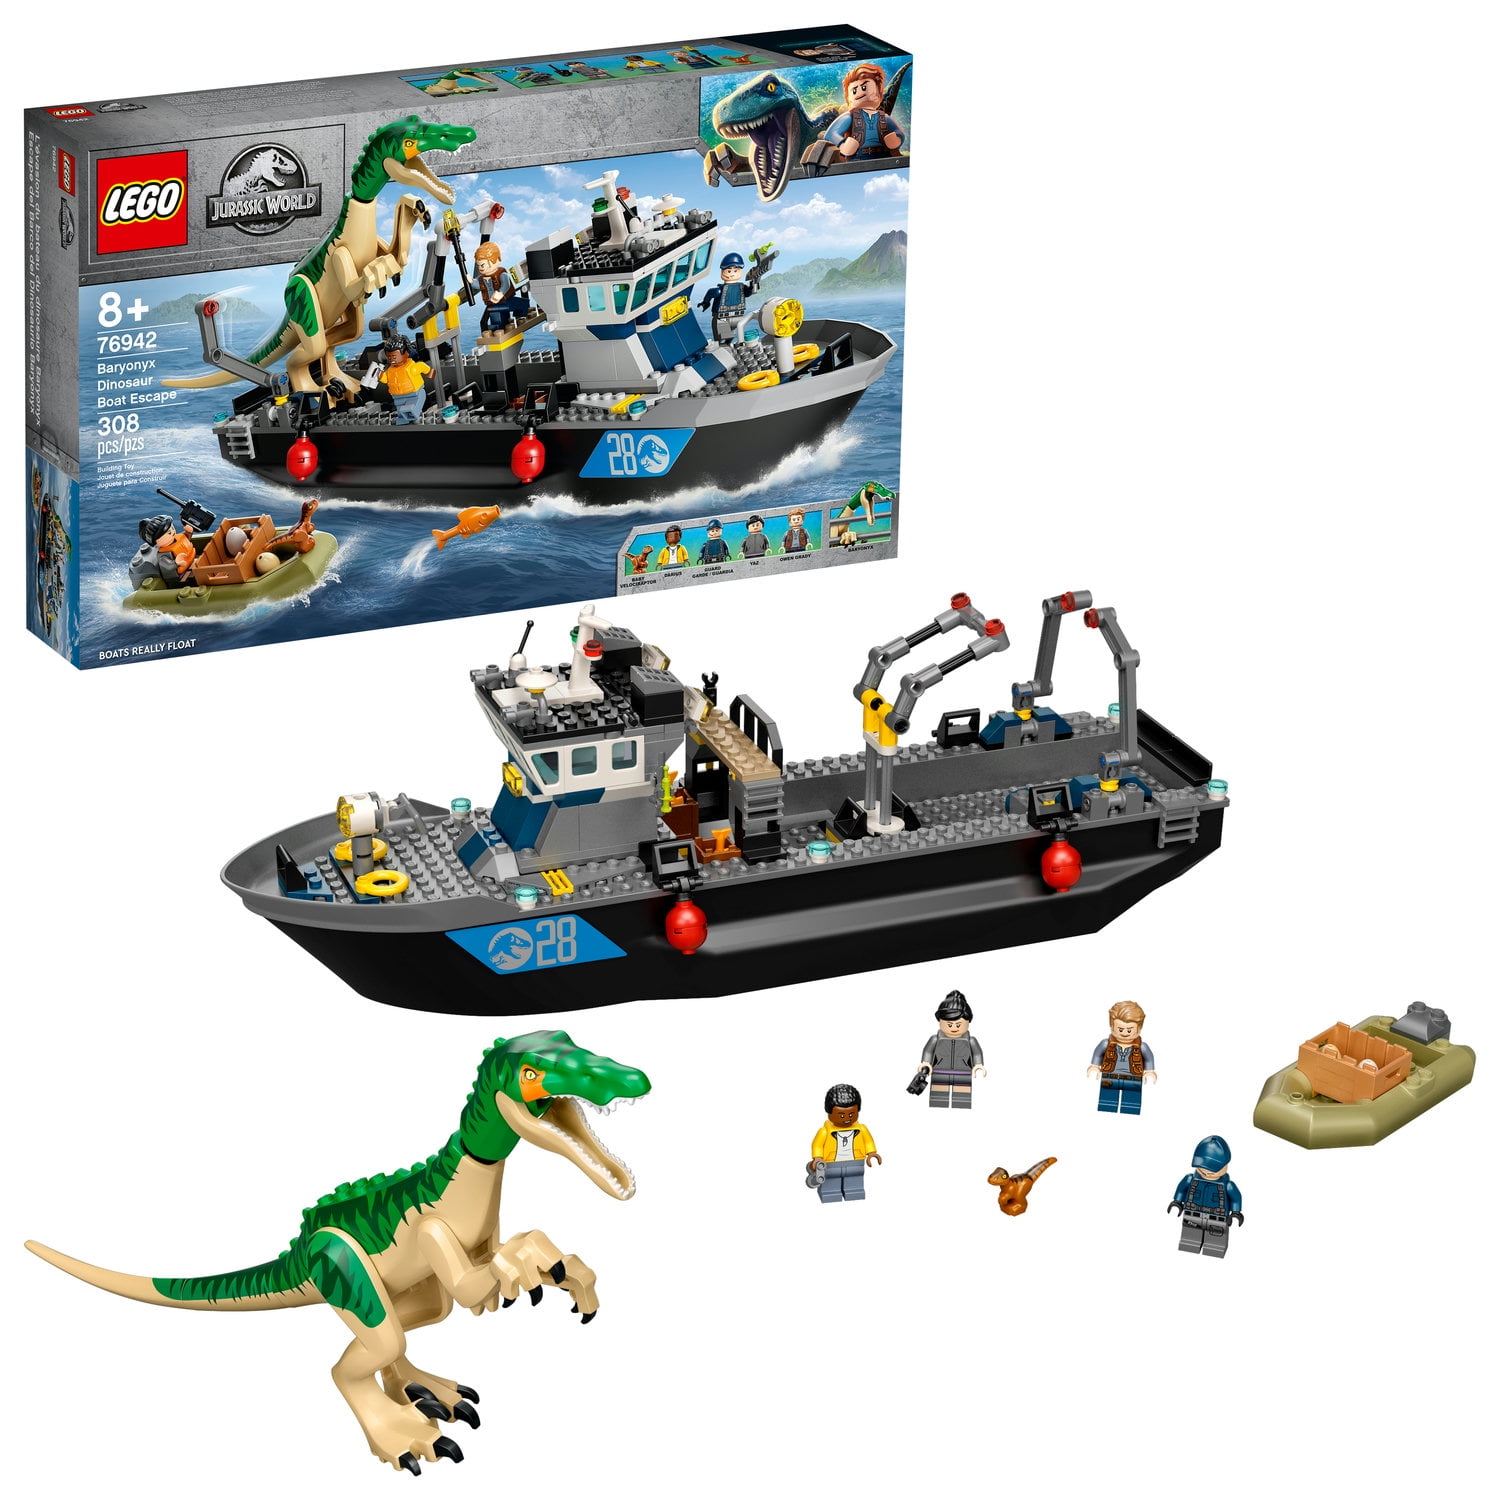 6 Inches Tall Big Dinosaur Fits Lego AU DE Indominus Rex Jurassic World 